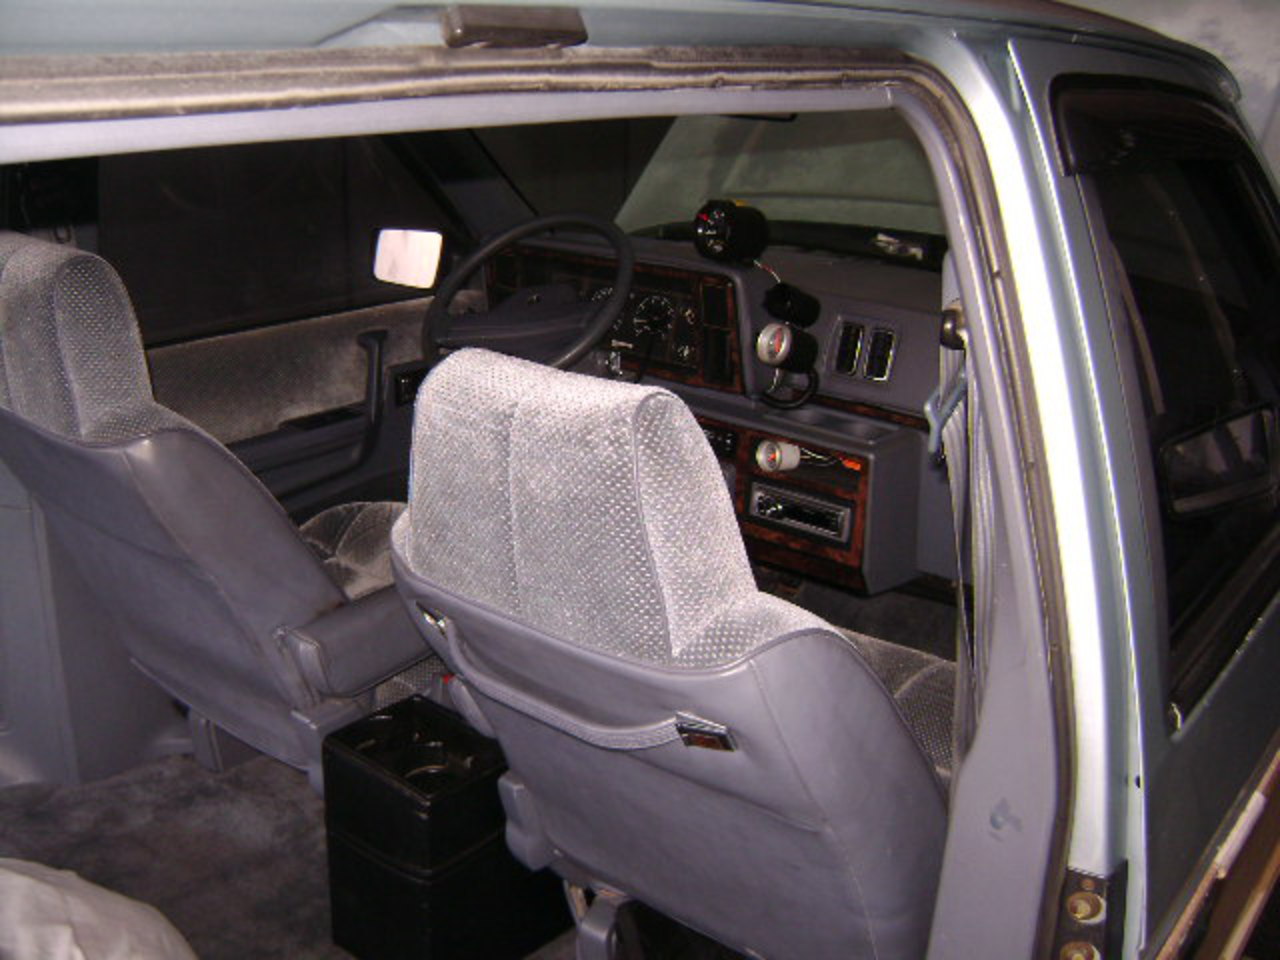 1989 Dodge Caravan SE TURBO - $3,500.00 - Page 2 - Turbo Dodge Forums